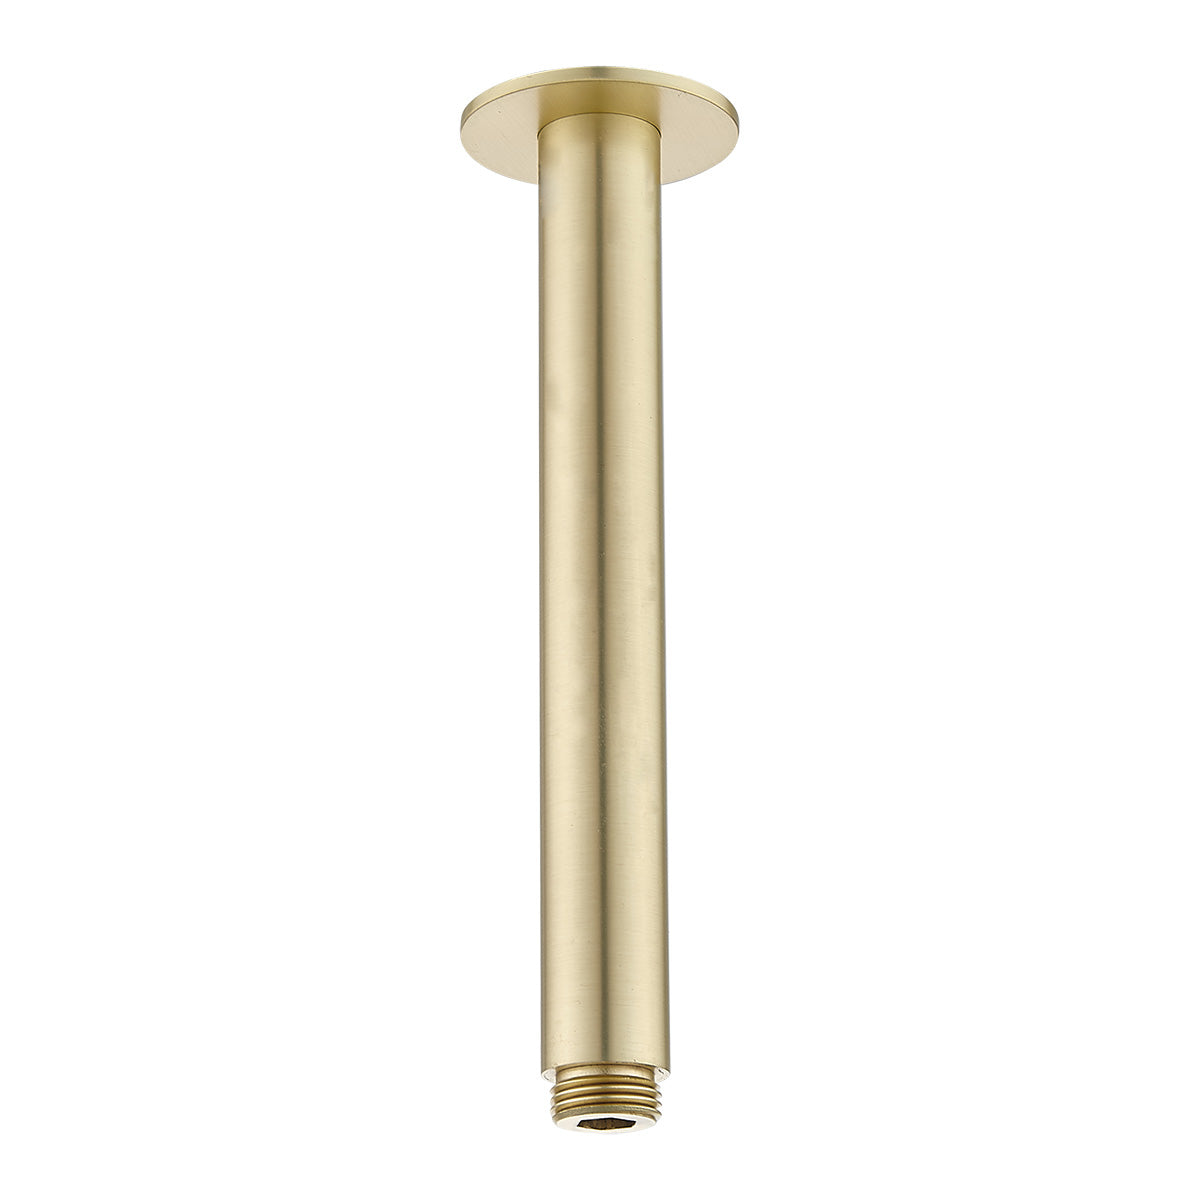 Chris Ceiling Shower Arm (Brushed Gold) - Hellycar Brushed Gold Rain Shower Arm